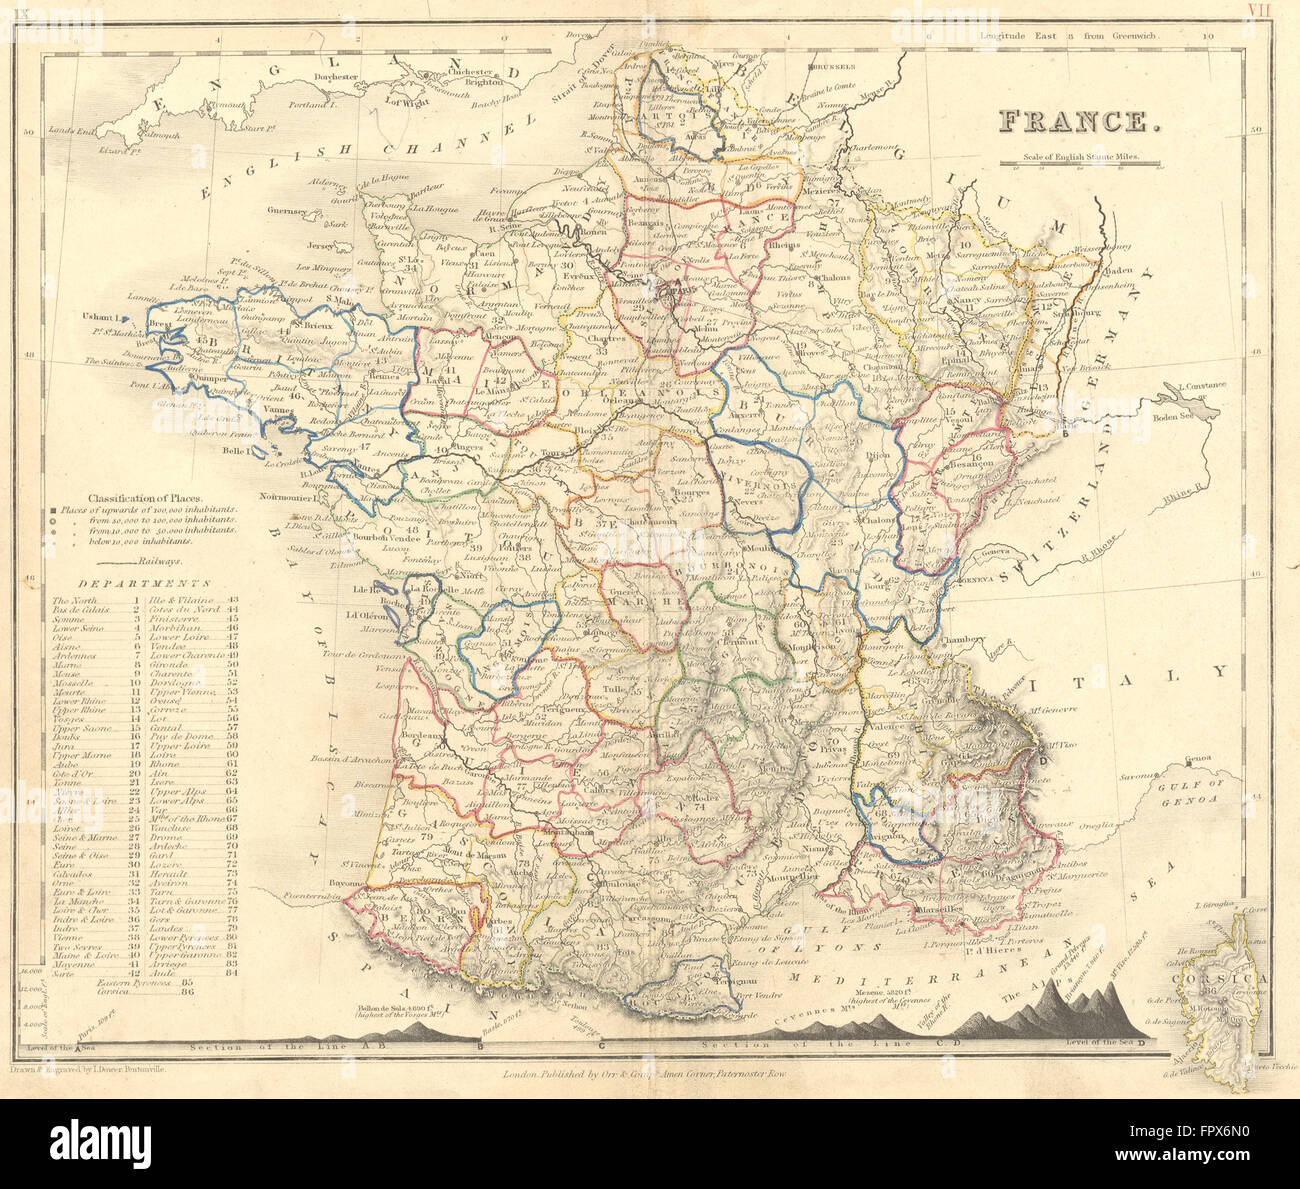 Frankreich: Mitgift: Berge, 1850 Antike Landkarte Stockfoto